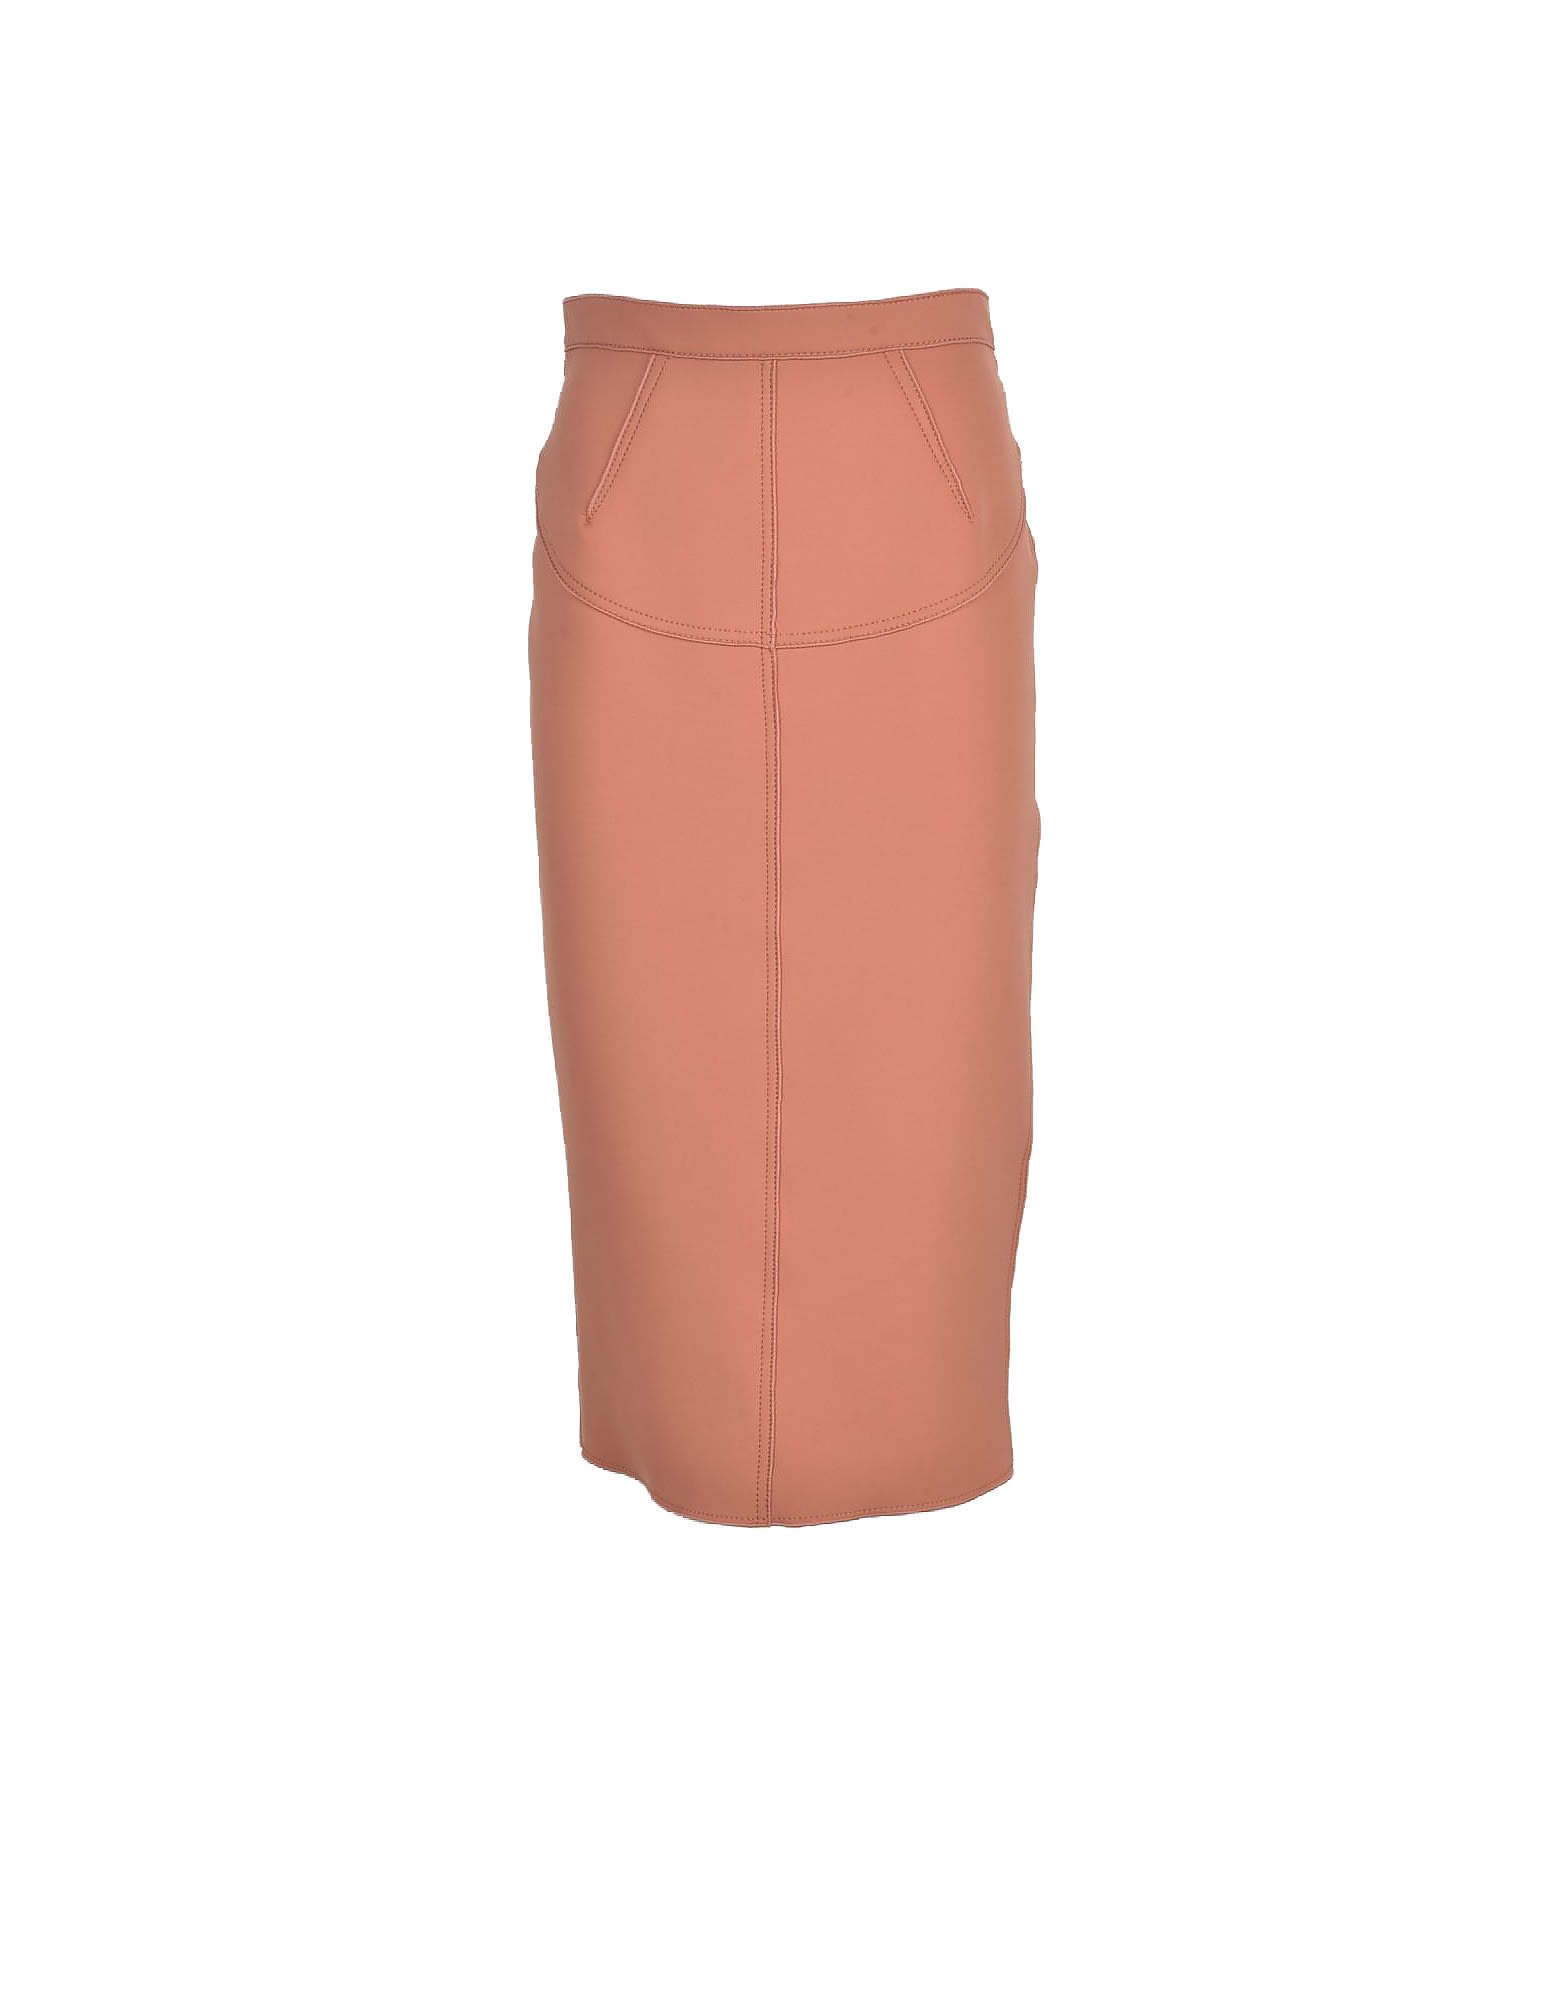 N.21 N°21 Womens Brick Skirt